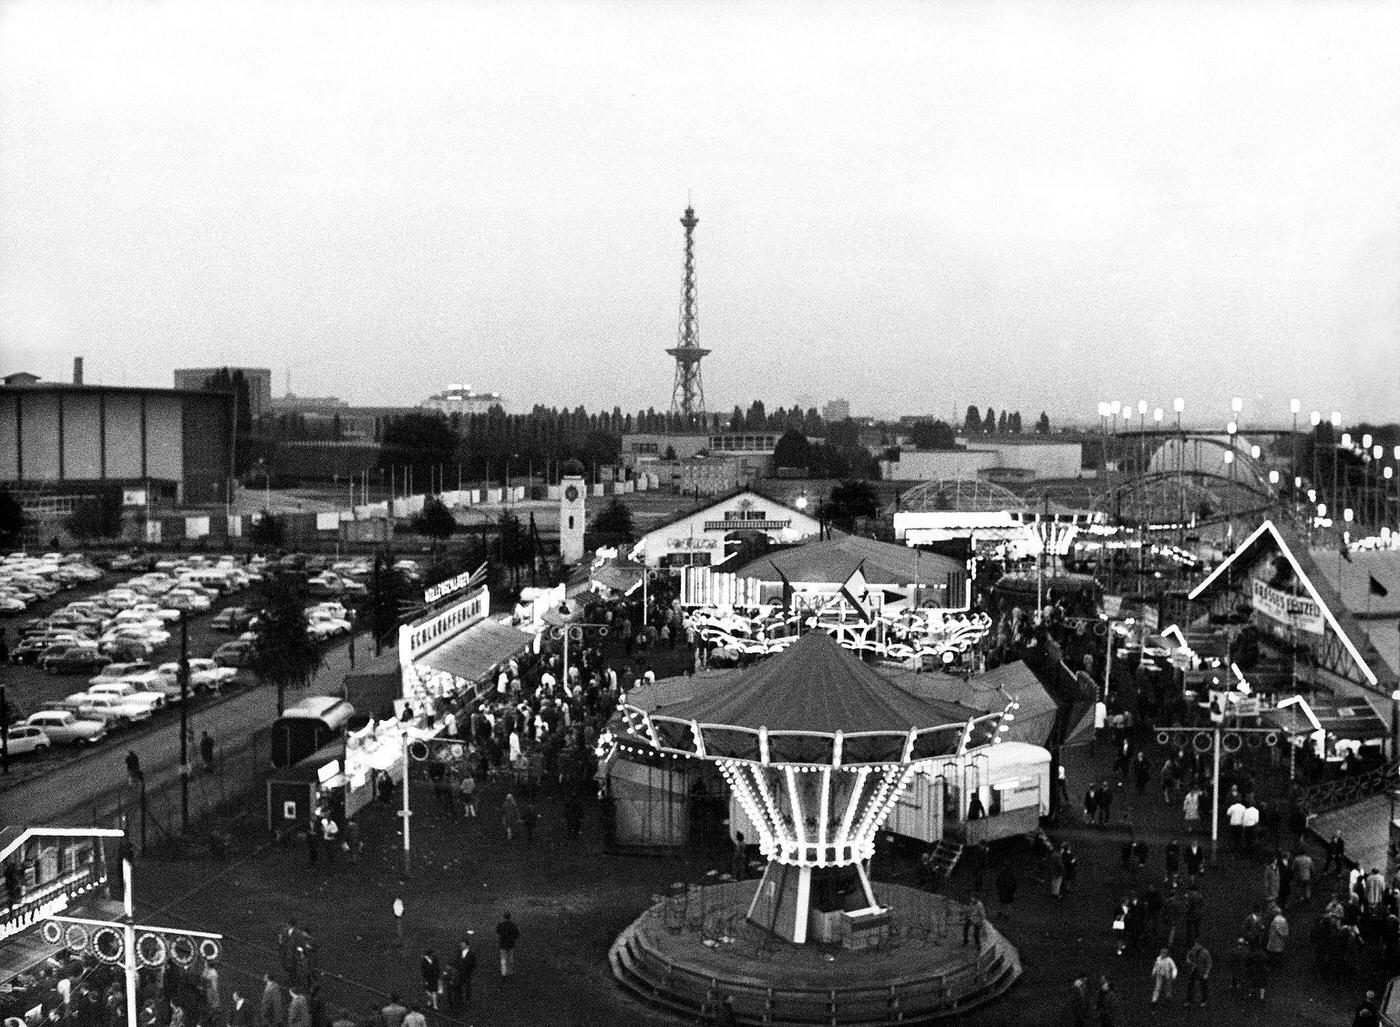 Oktoberfest Berlin Overview. 1967.